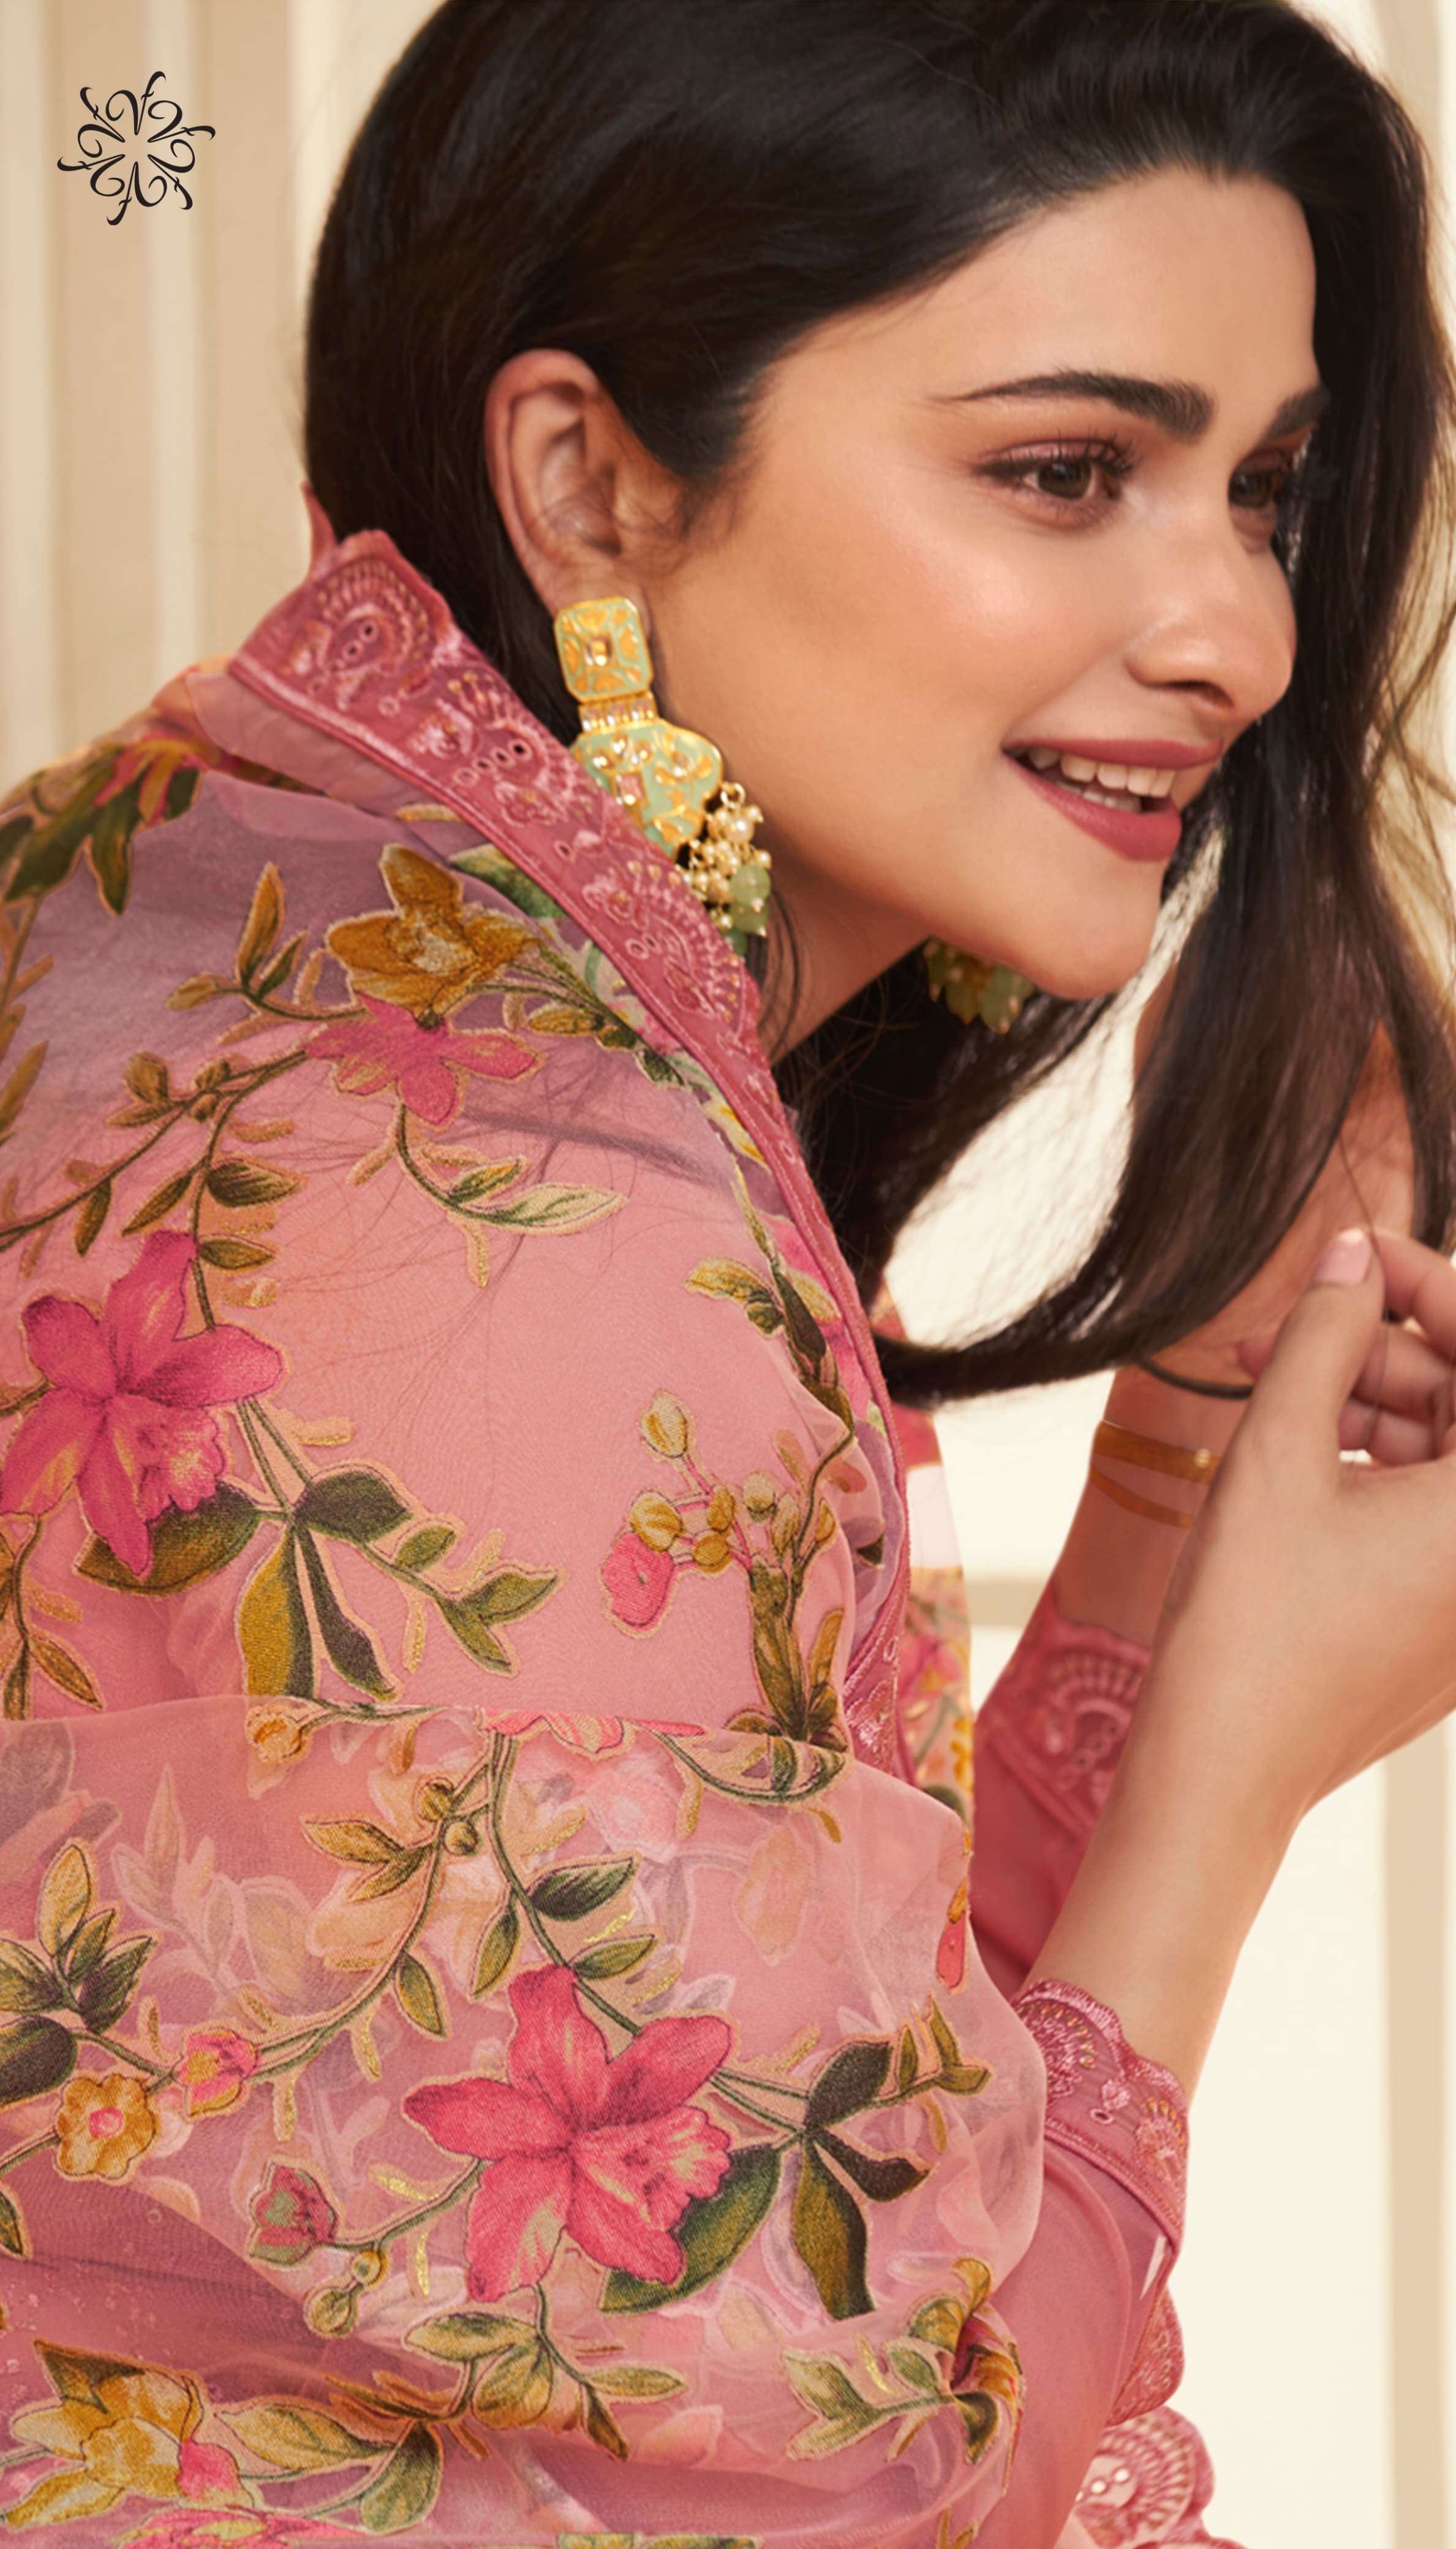 vinay fashion kuleesh apoorva schiffli embroidery orgenza attrective look salwar suit catalog